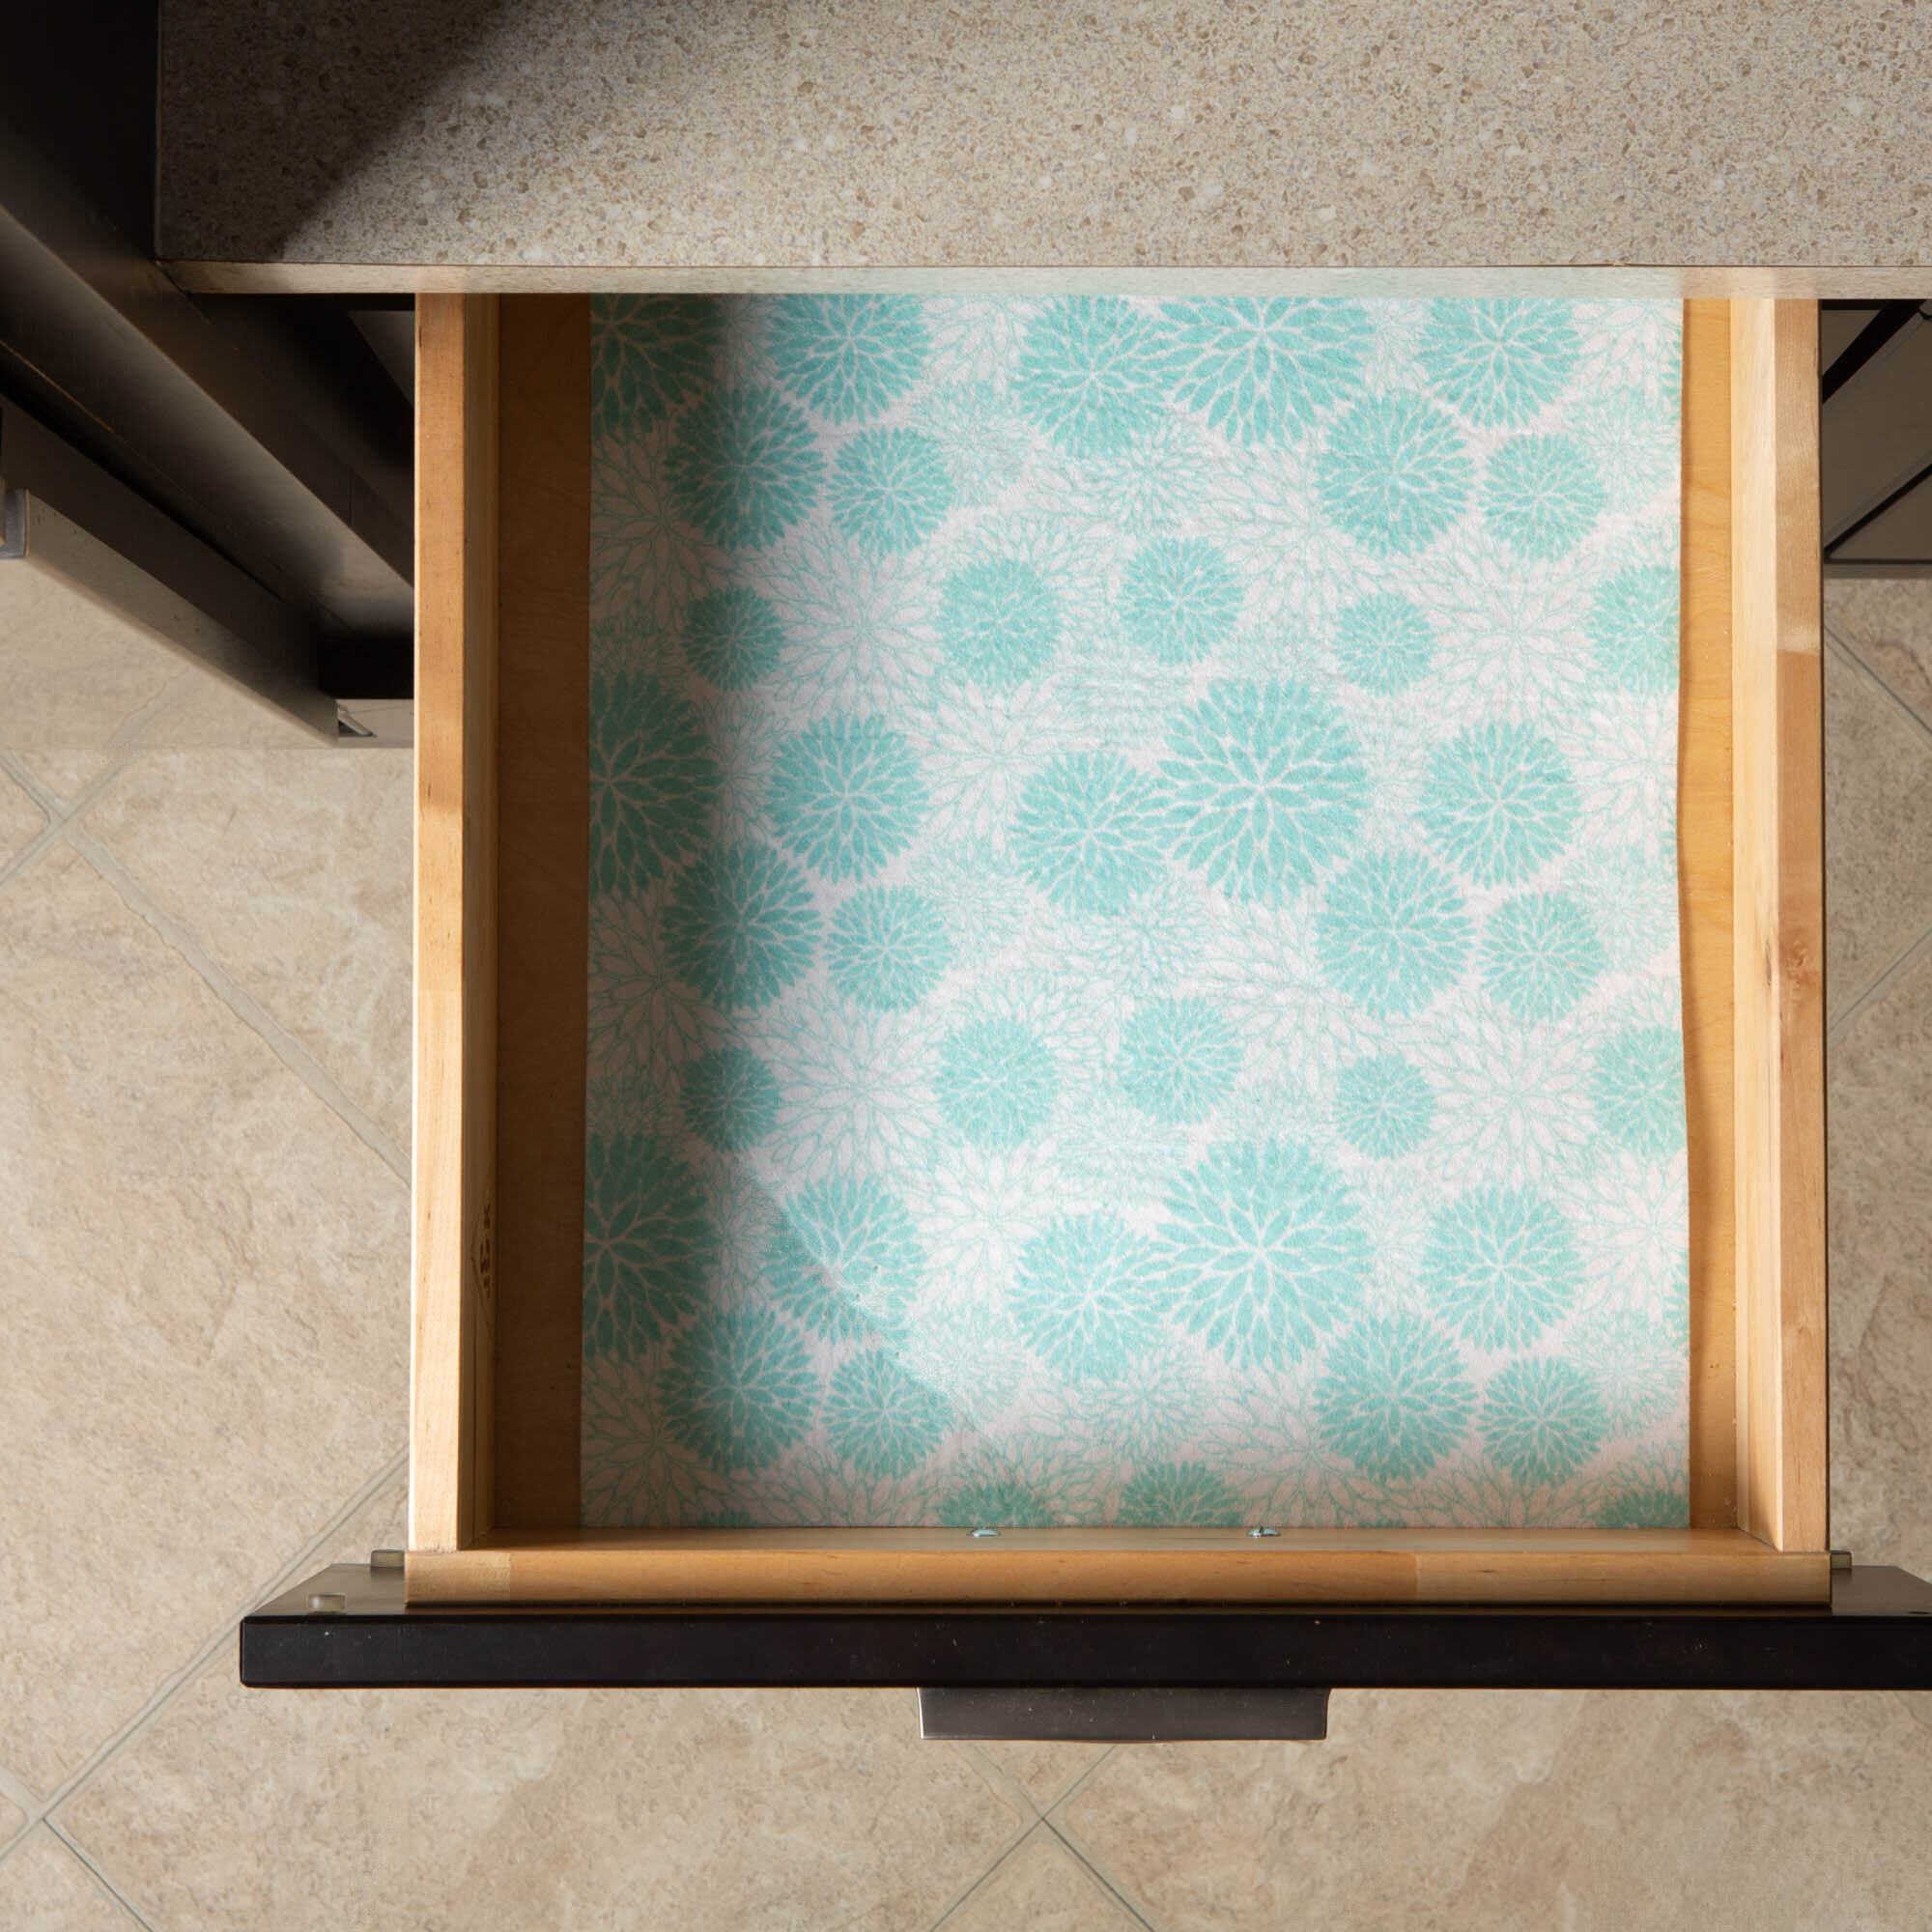 Smart Design Shelf Liner Premium Grip - (18 inch x 8 Feet) - Drawer Cabinet Non Adhesive - Home & Kitchen [Cool Gray]